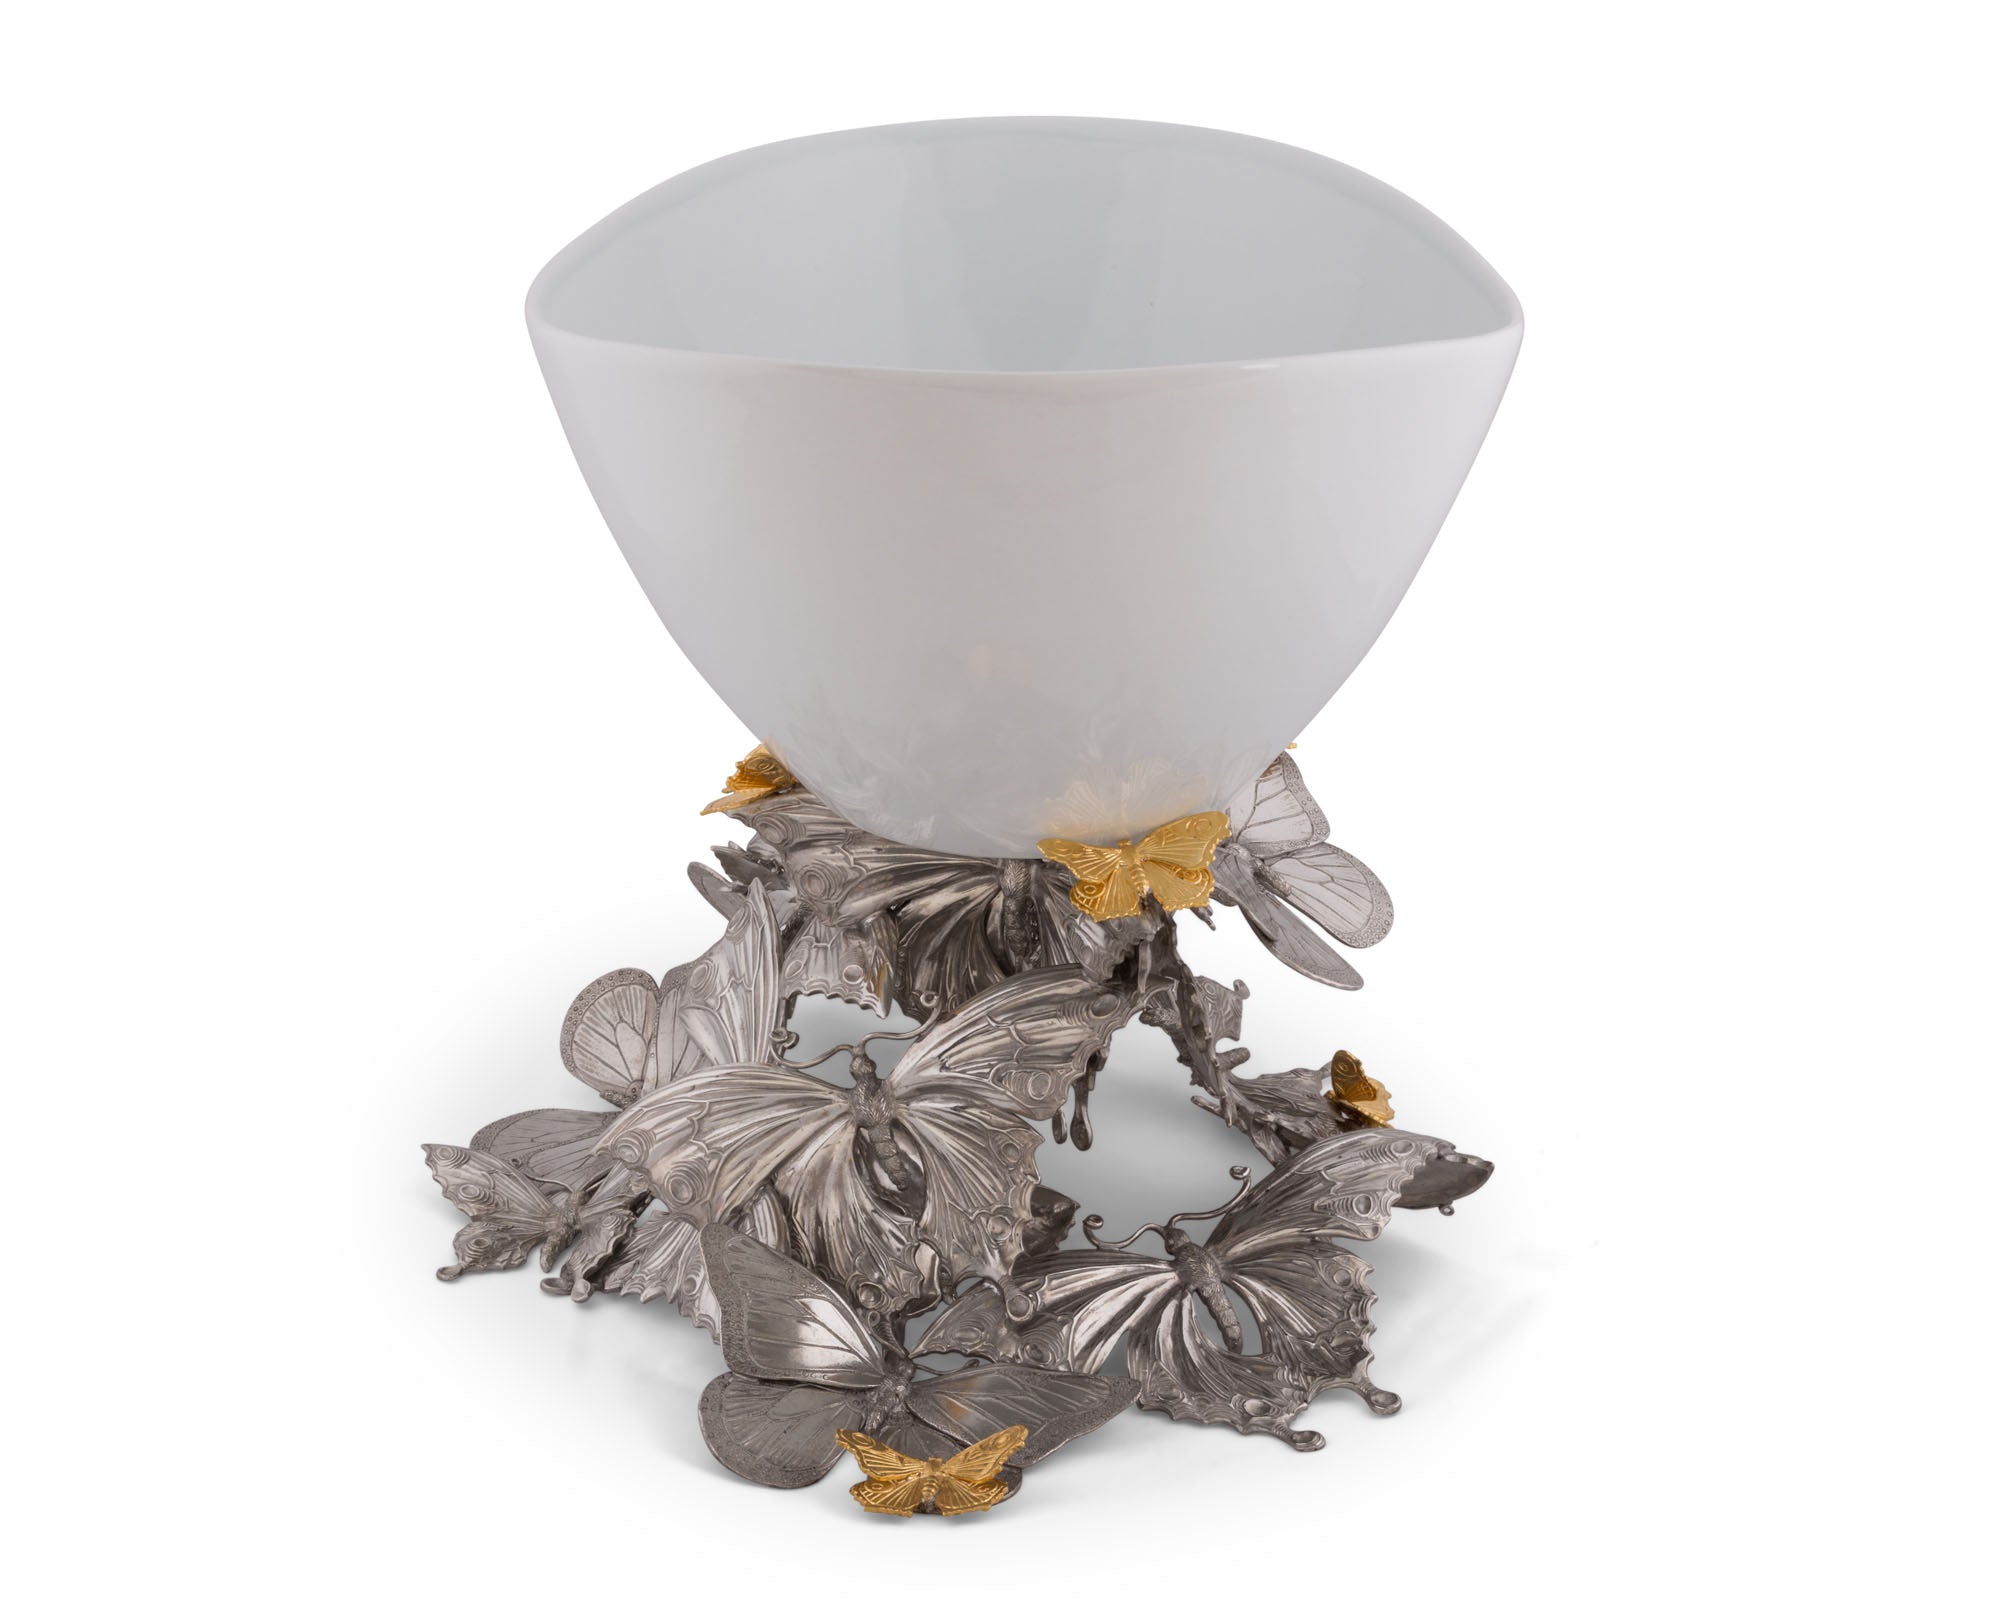 Vagabond House Pewter Butterfly Centerpiece Porcelain Bowl Product Image